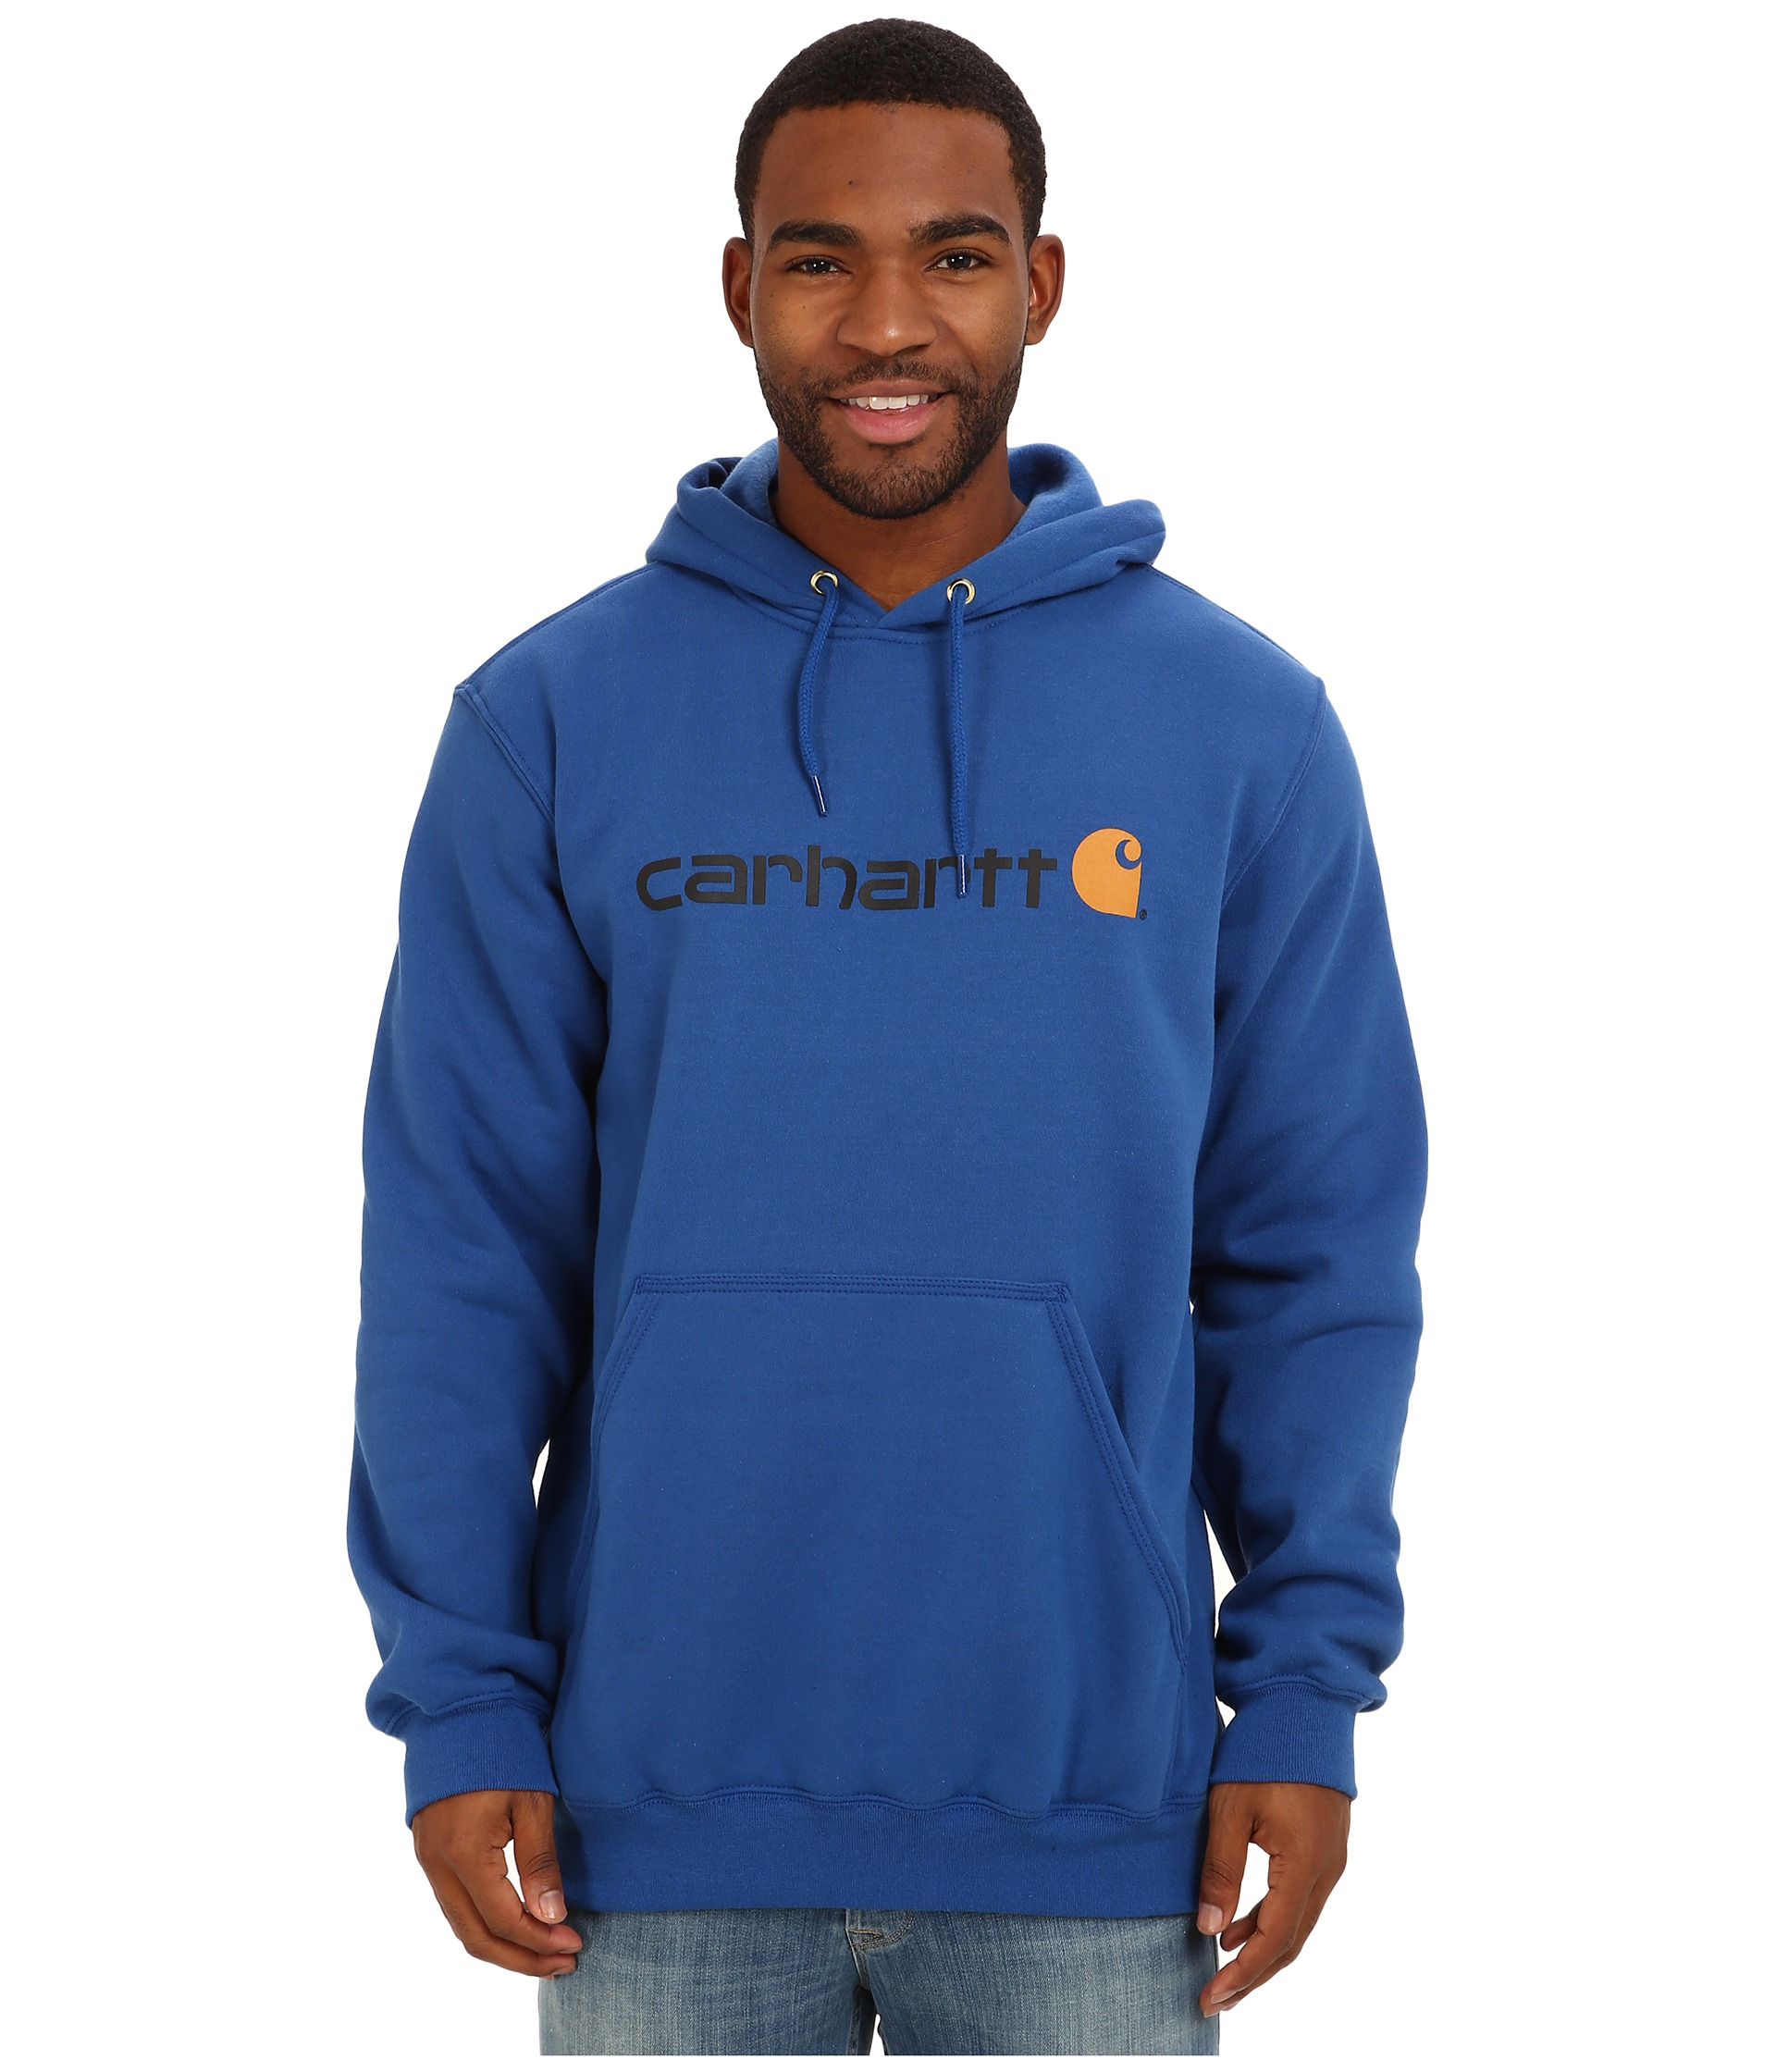 Lyst - Carhartt Signature Logo Midweight Sweatshirt in Blue for Men